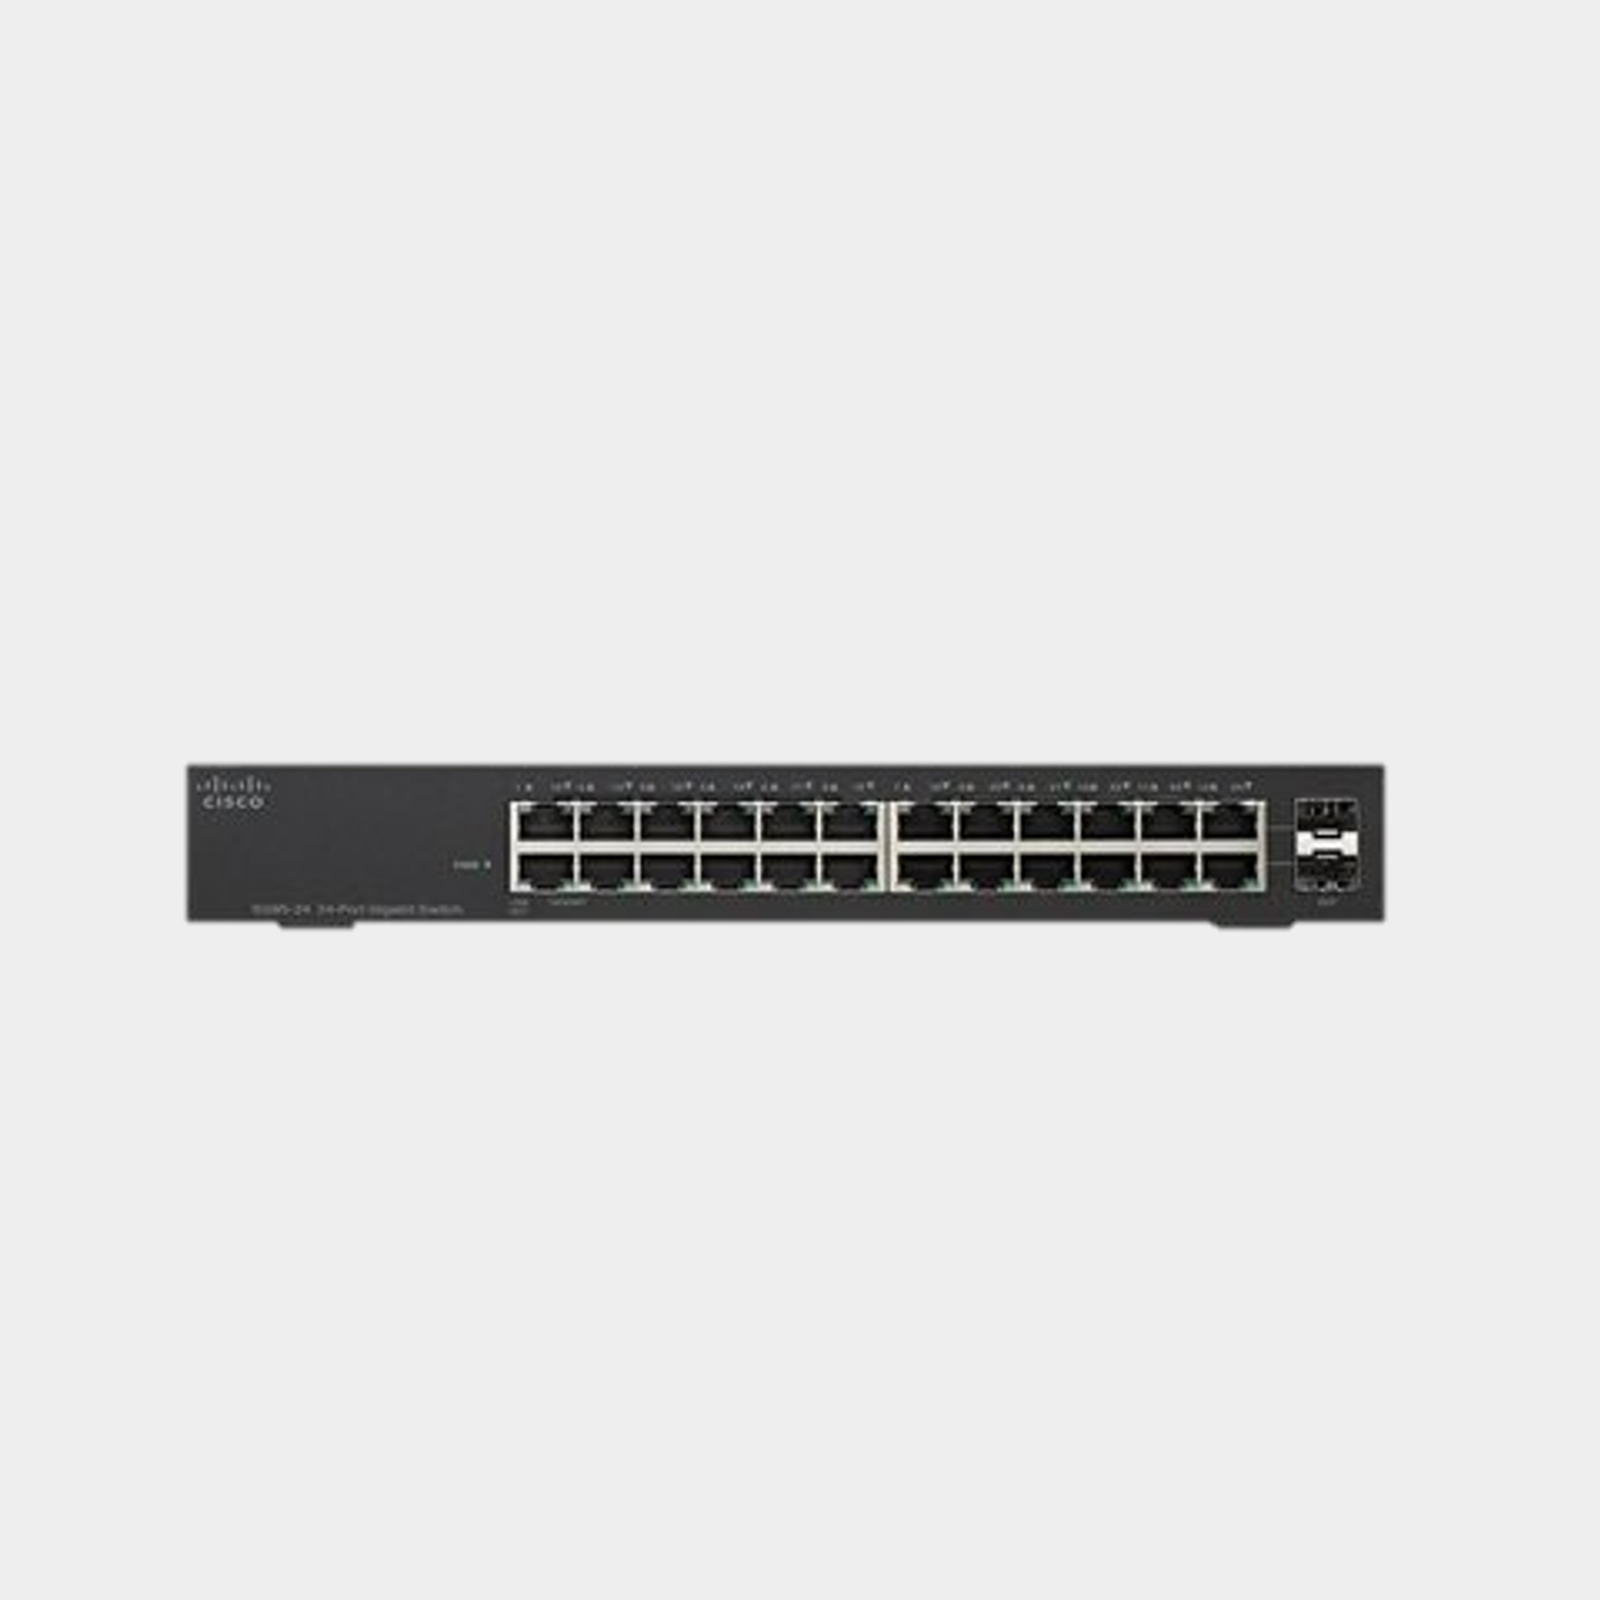 Cisco SG95 Compact 24-Port Gigabit Switch (SG95-24-AS)